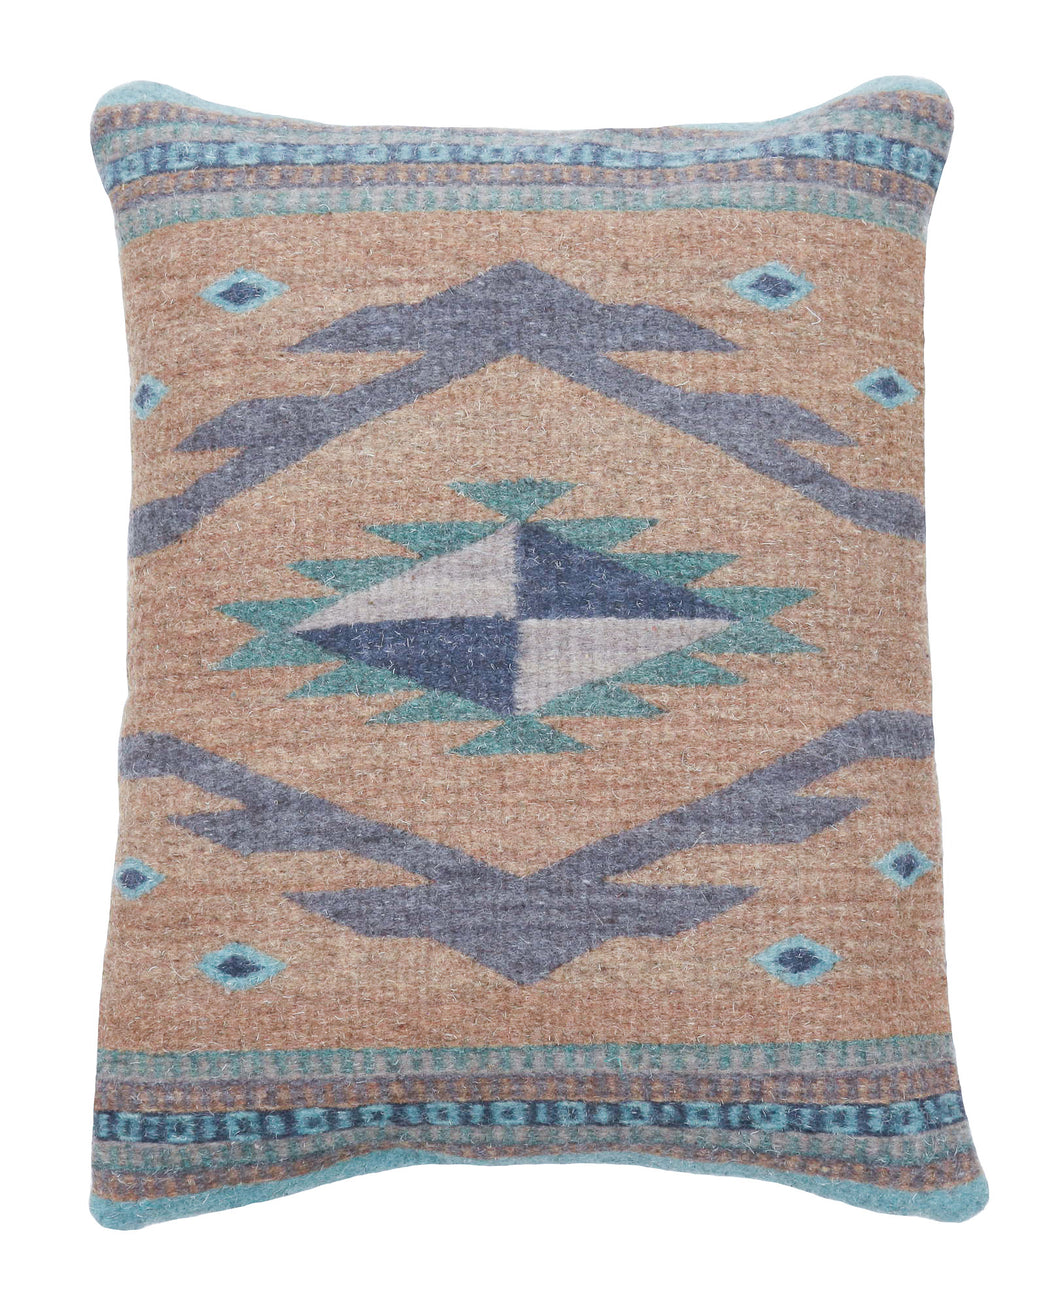 Handwoven Zapotec Indian Pillow - Vallarta Wool Oaxacan Textile